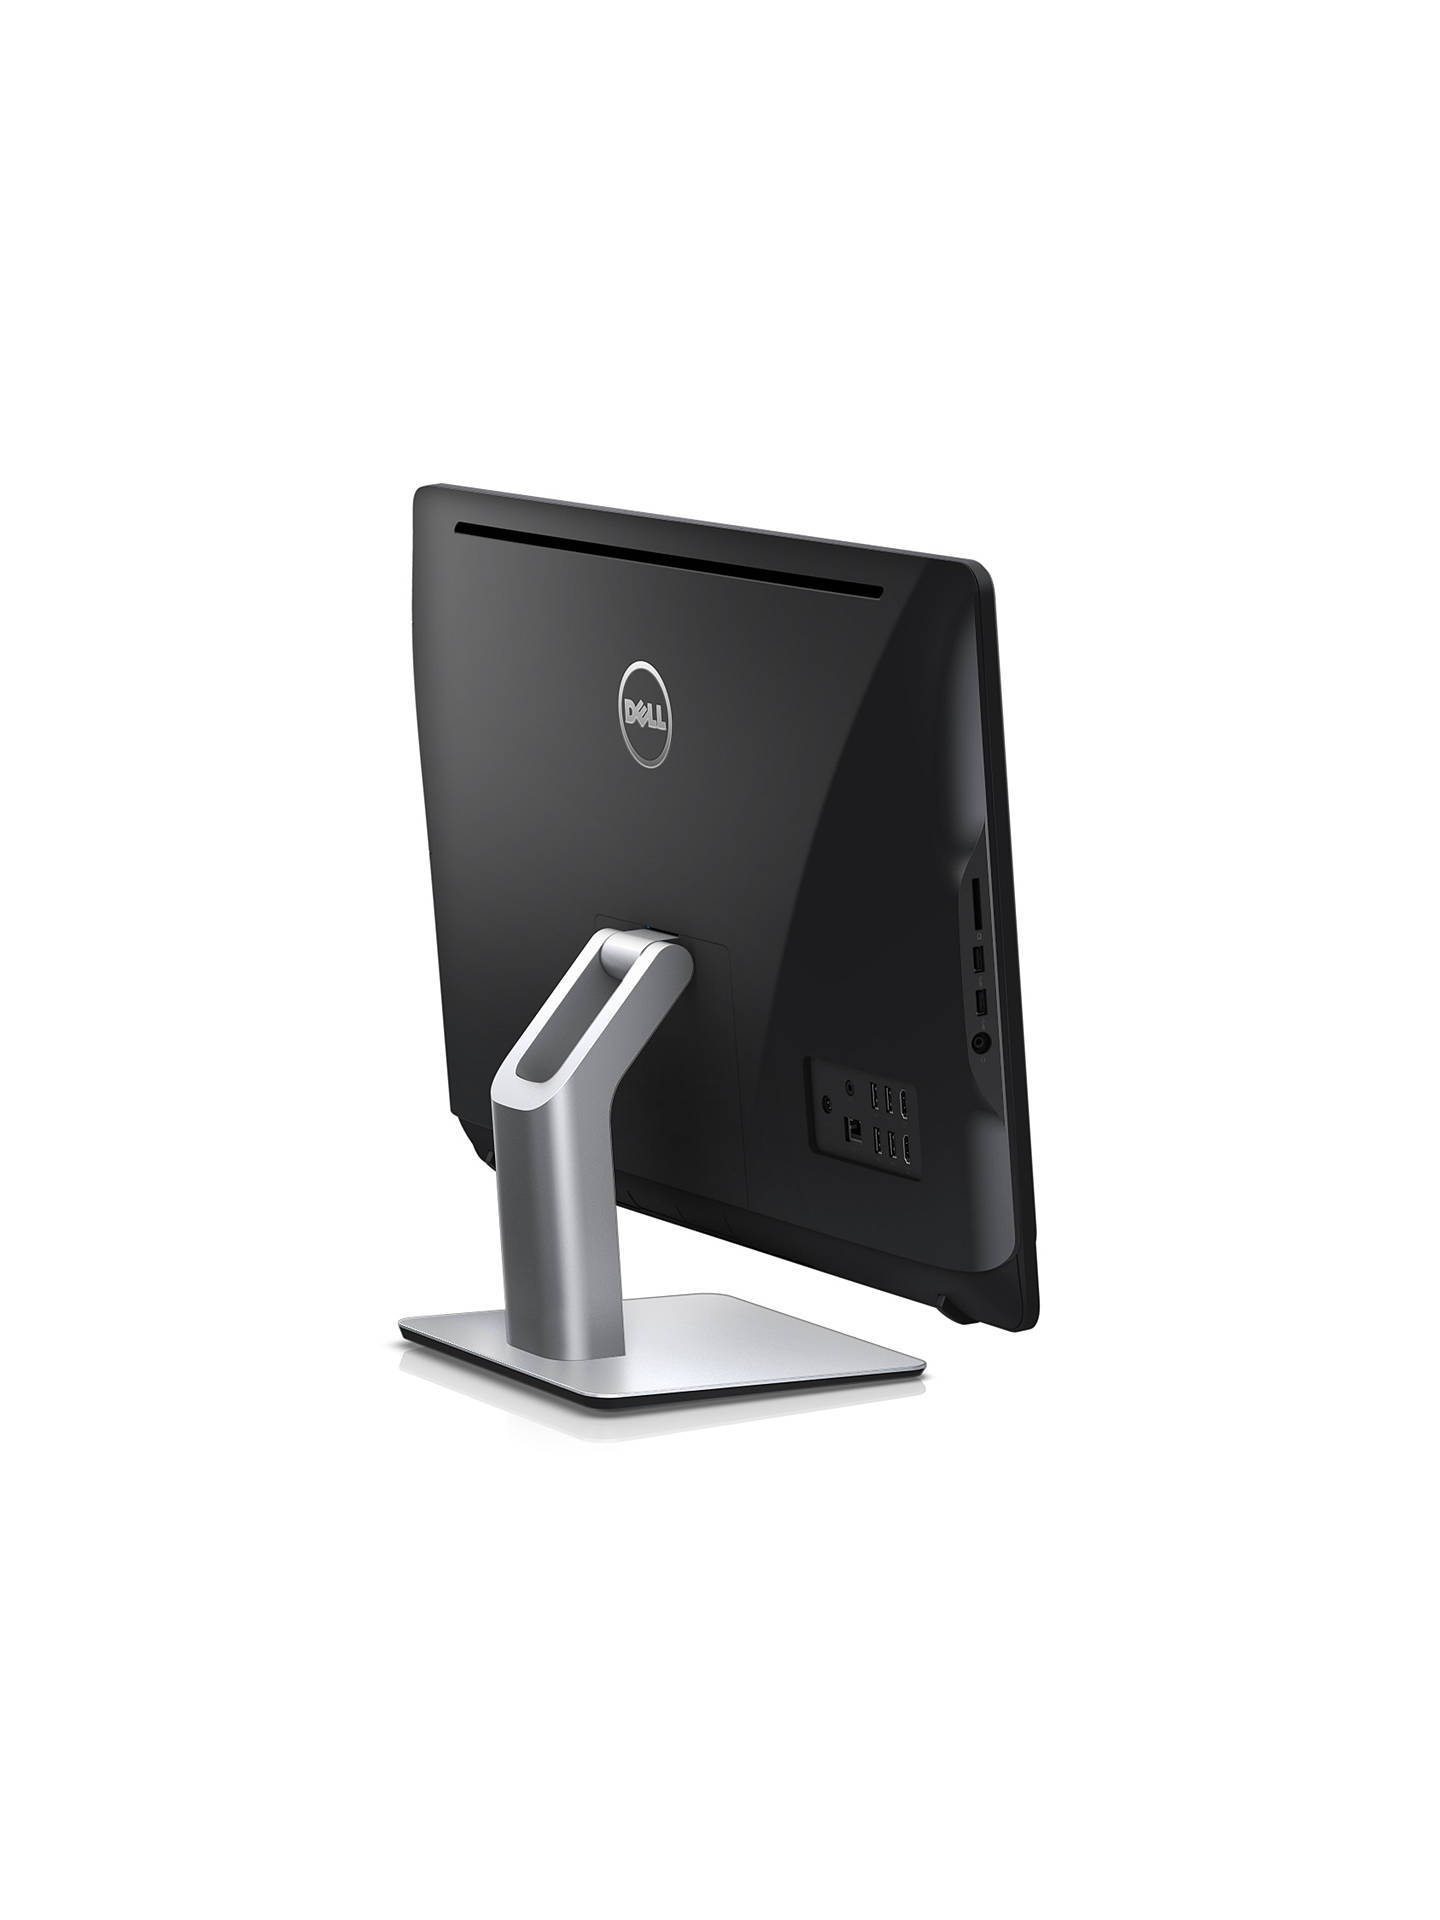 Dell Inspiron 24 5000 Series All-in-One Desktop PC, Intel ...